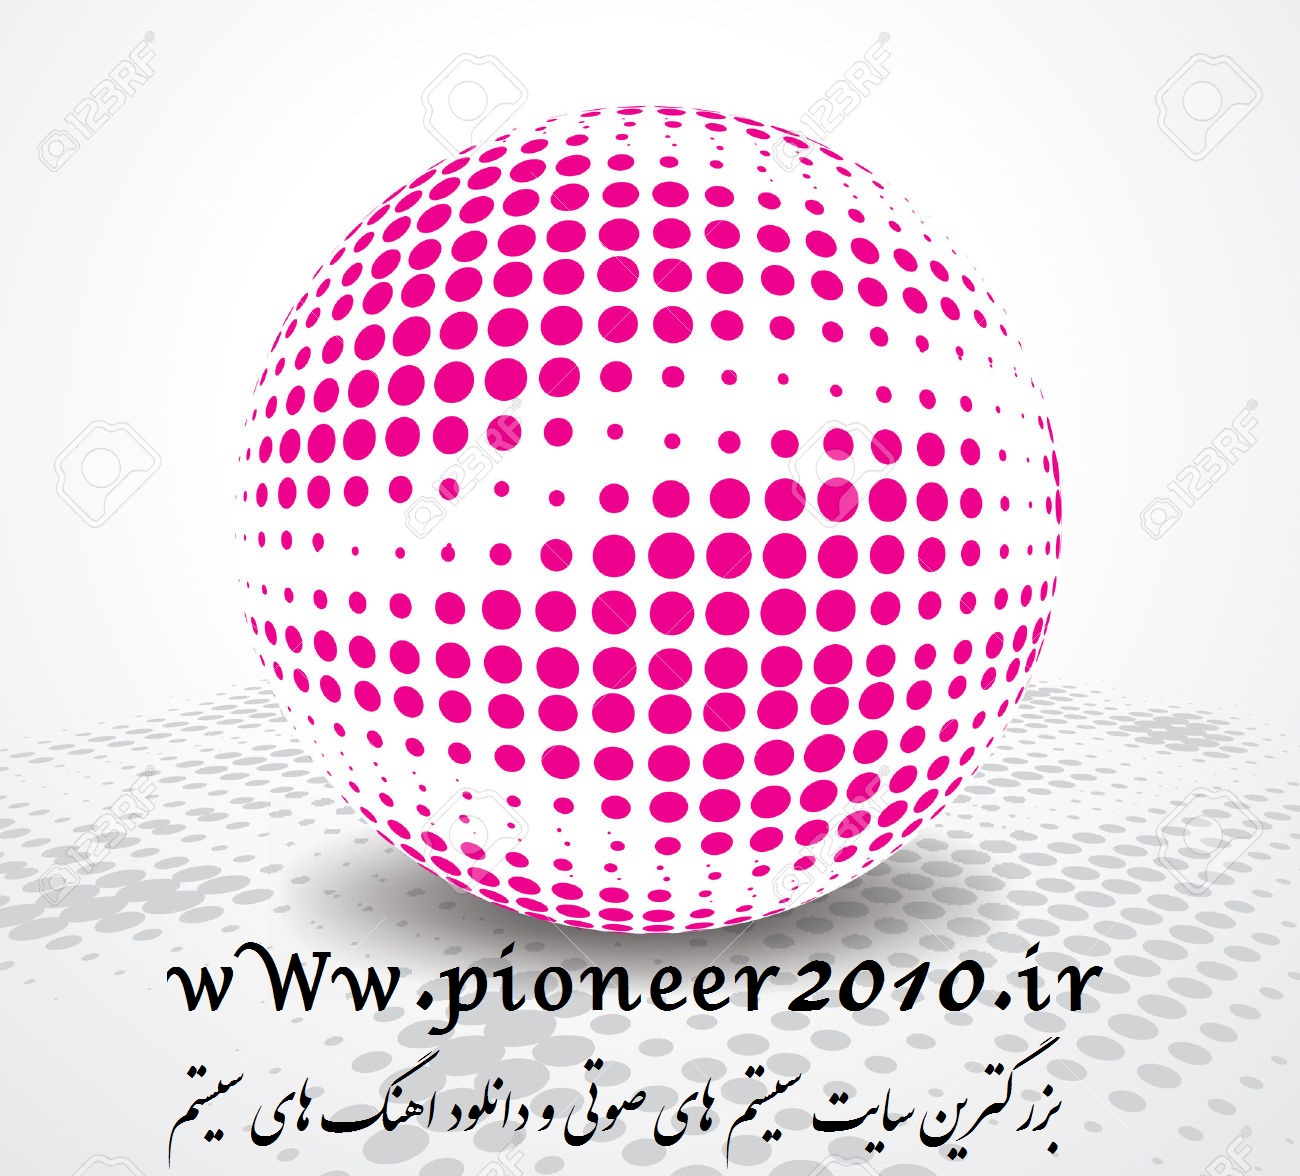 دانلود اهنگ بیس ویبره خفن با کلام لینک مستقیم 2014 /wWw.pioneer2010.ir